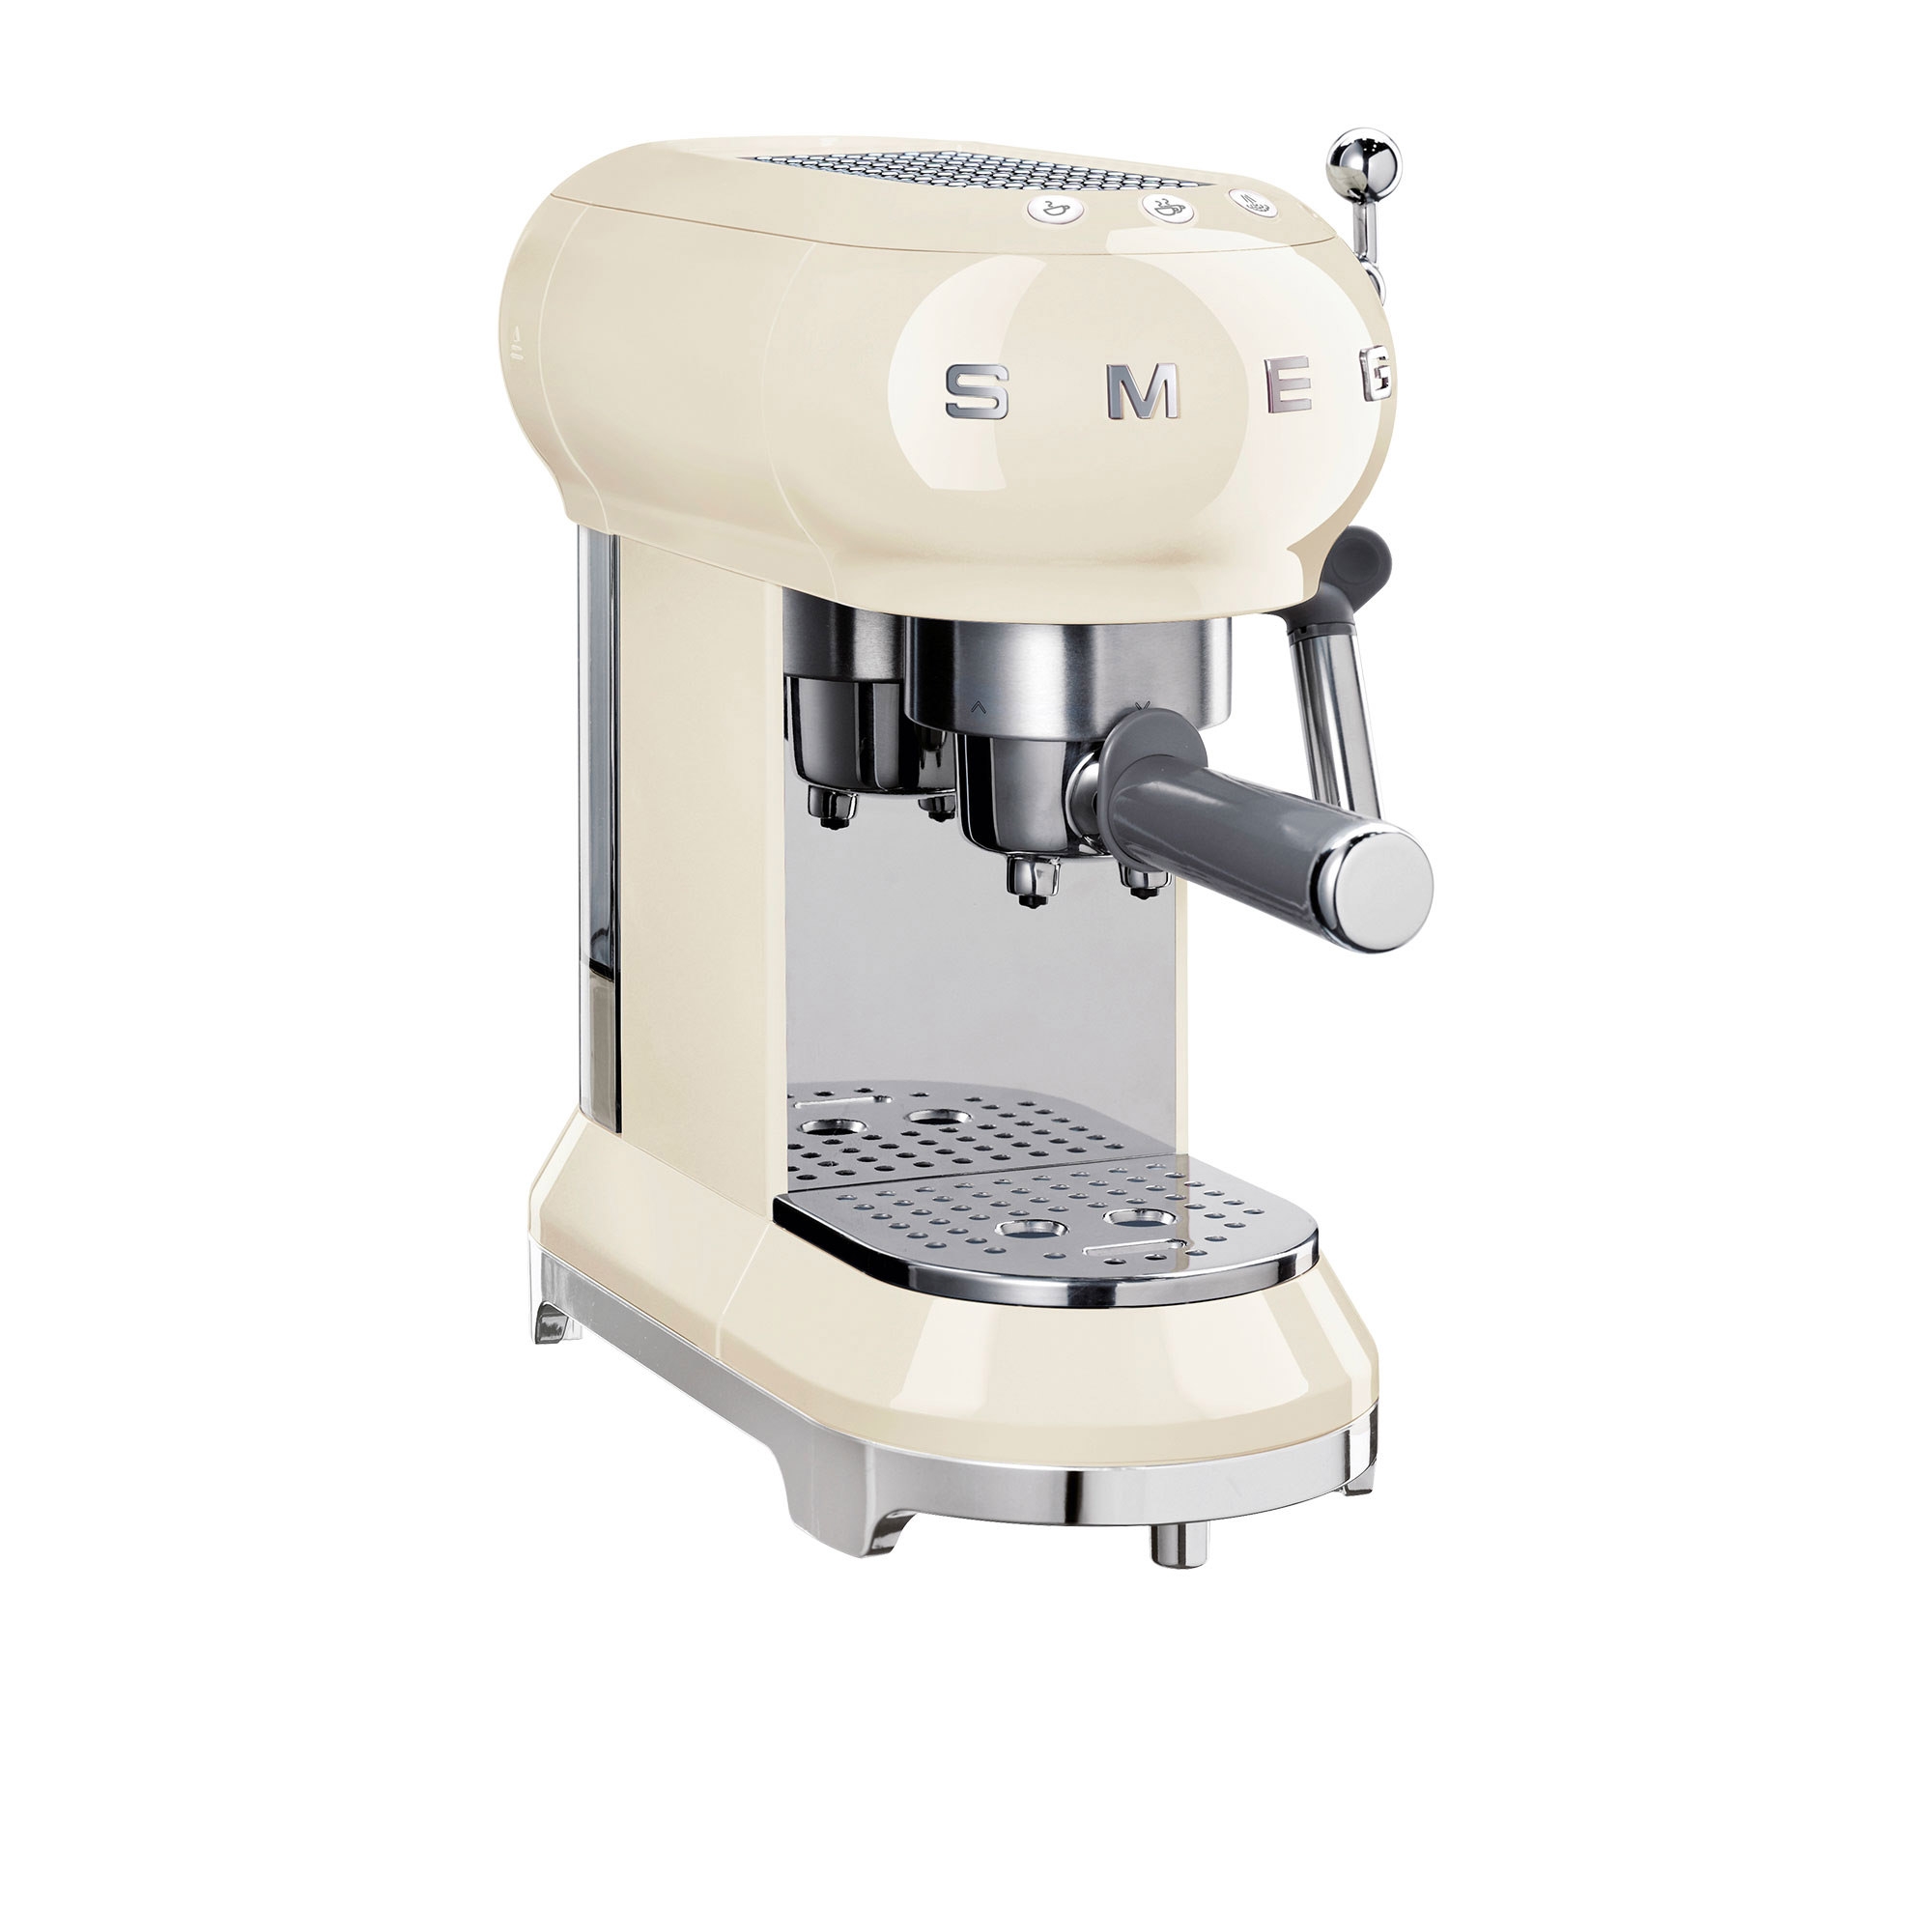 Smeg 50's Retro Style Espresso Coffee Machine Cream Image 1